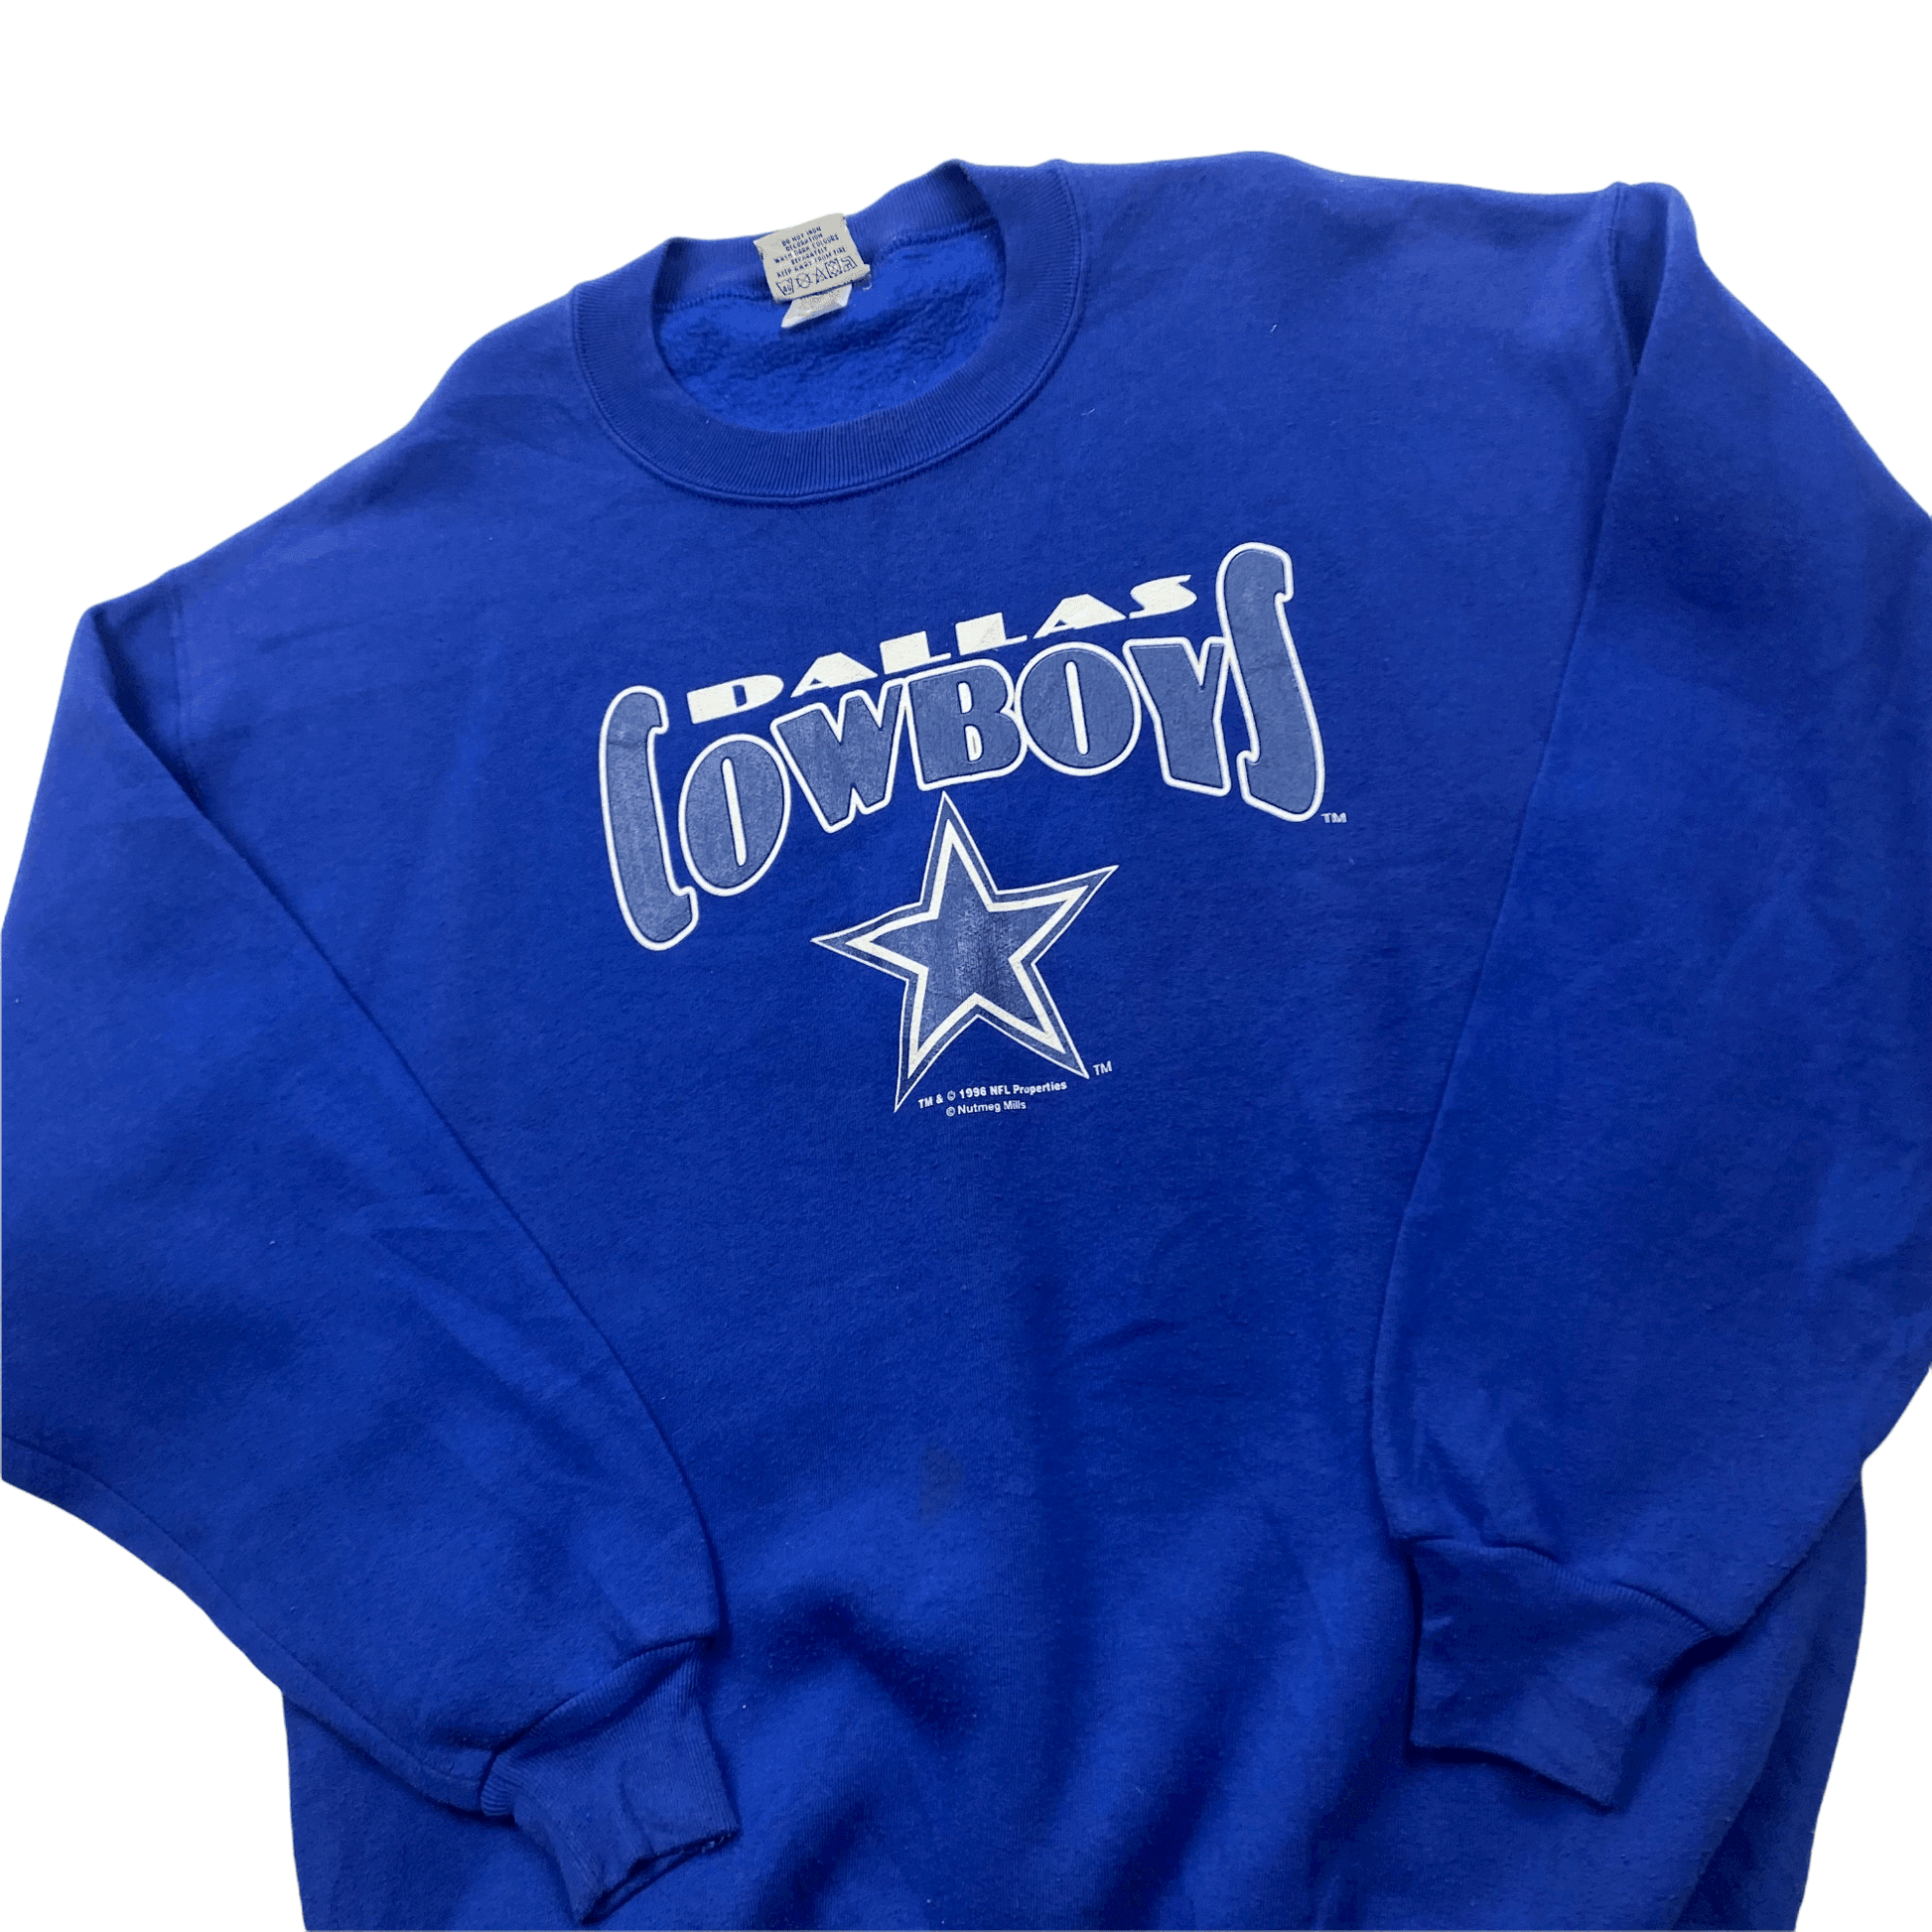 Vintage 90s Blue Nutmeg Dallas Cowboys NFL Spell-Out Sweatshirt - Extra Large - The Streetwear Studio